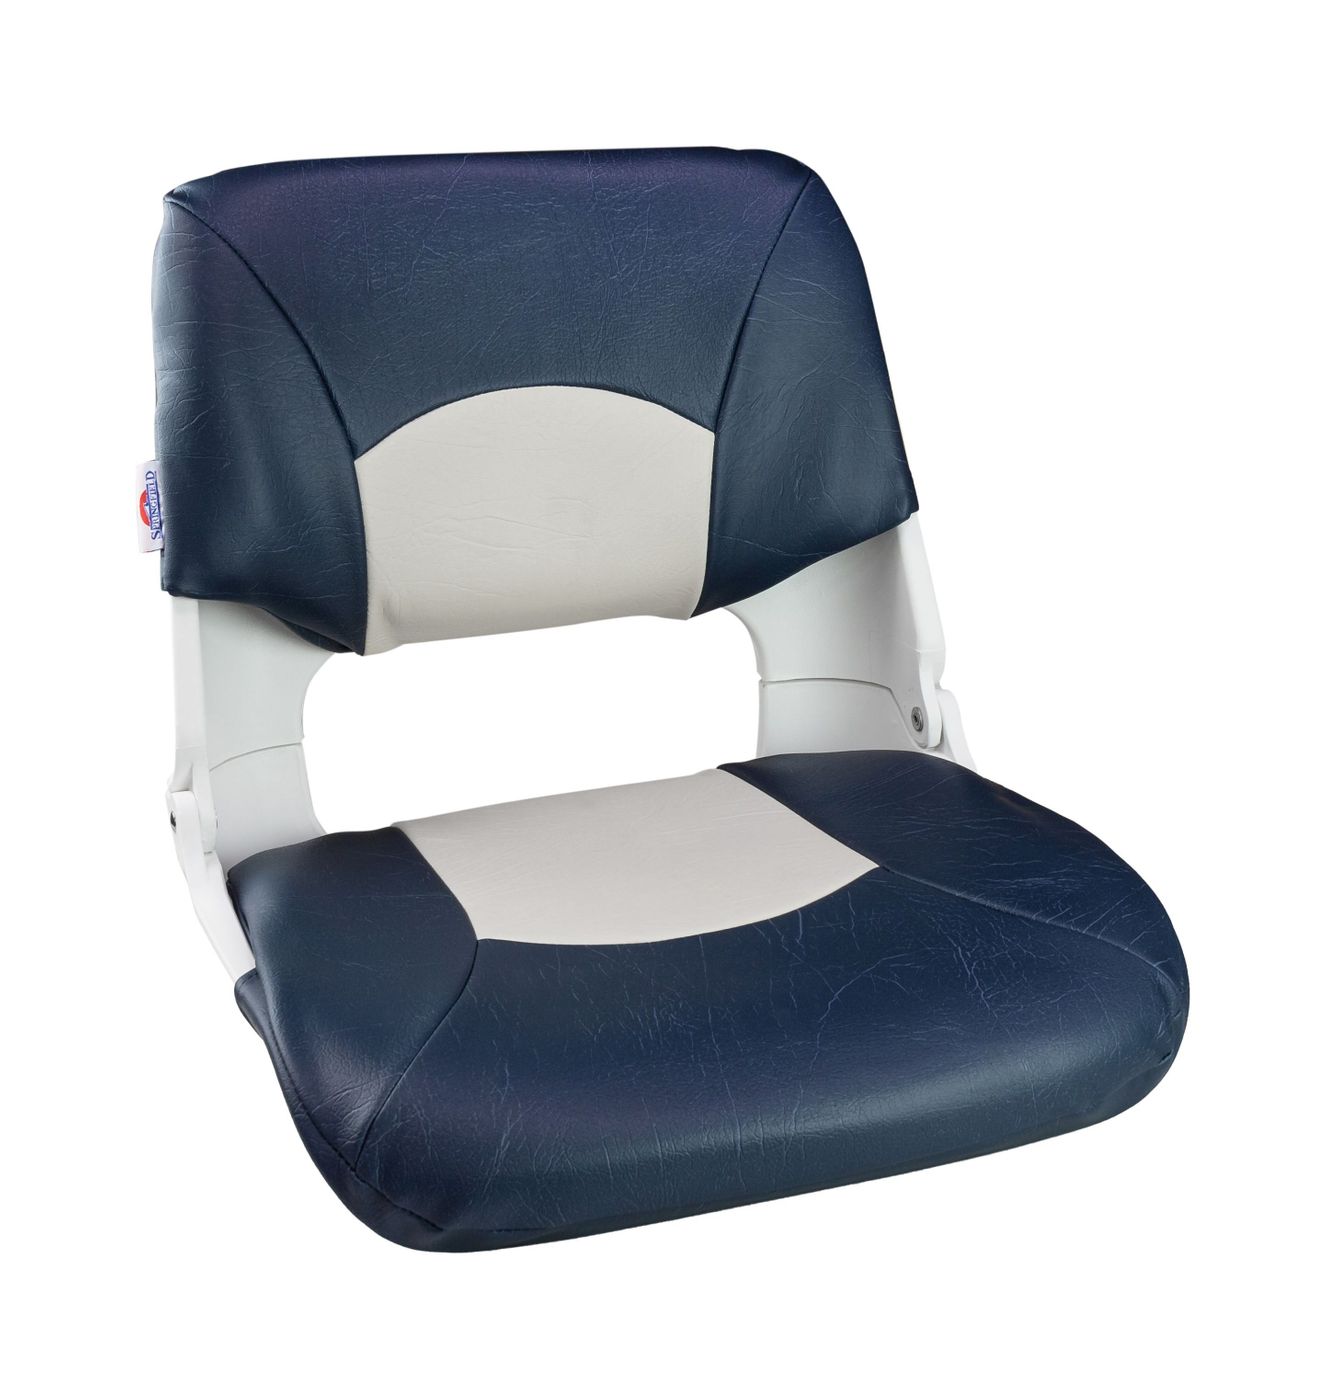 Кресло складное мягкое SKIPPER, цвет синий/белый 1061016 кресло мягкое складное обивка винил синий marine rocket 75103b mr